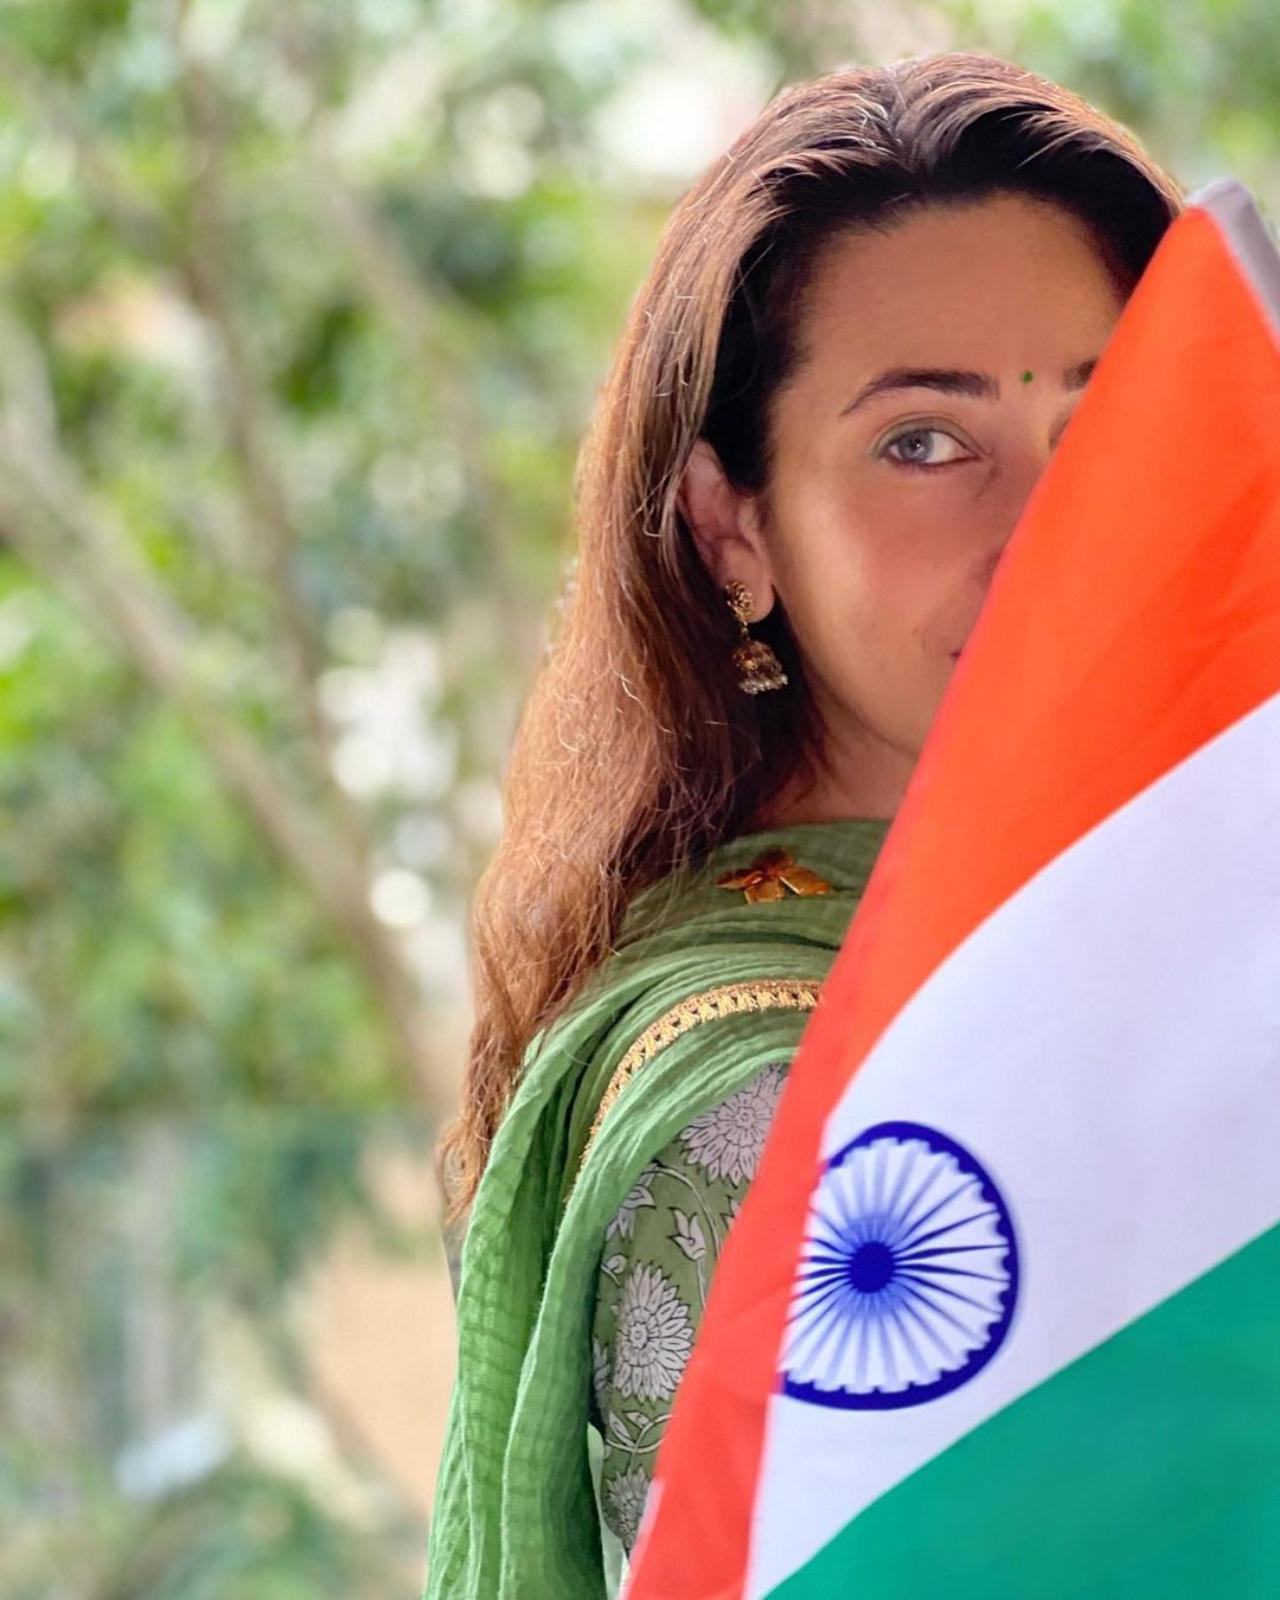 Karisma Kapoor
Karisma Kapoor unleashed her desi avatar on Instagram on the occasion of Indpendence Day